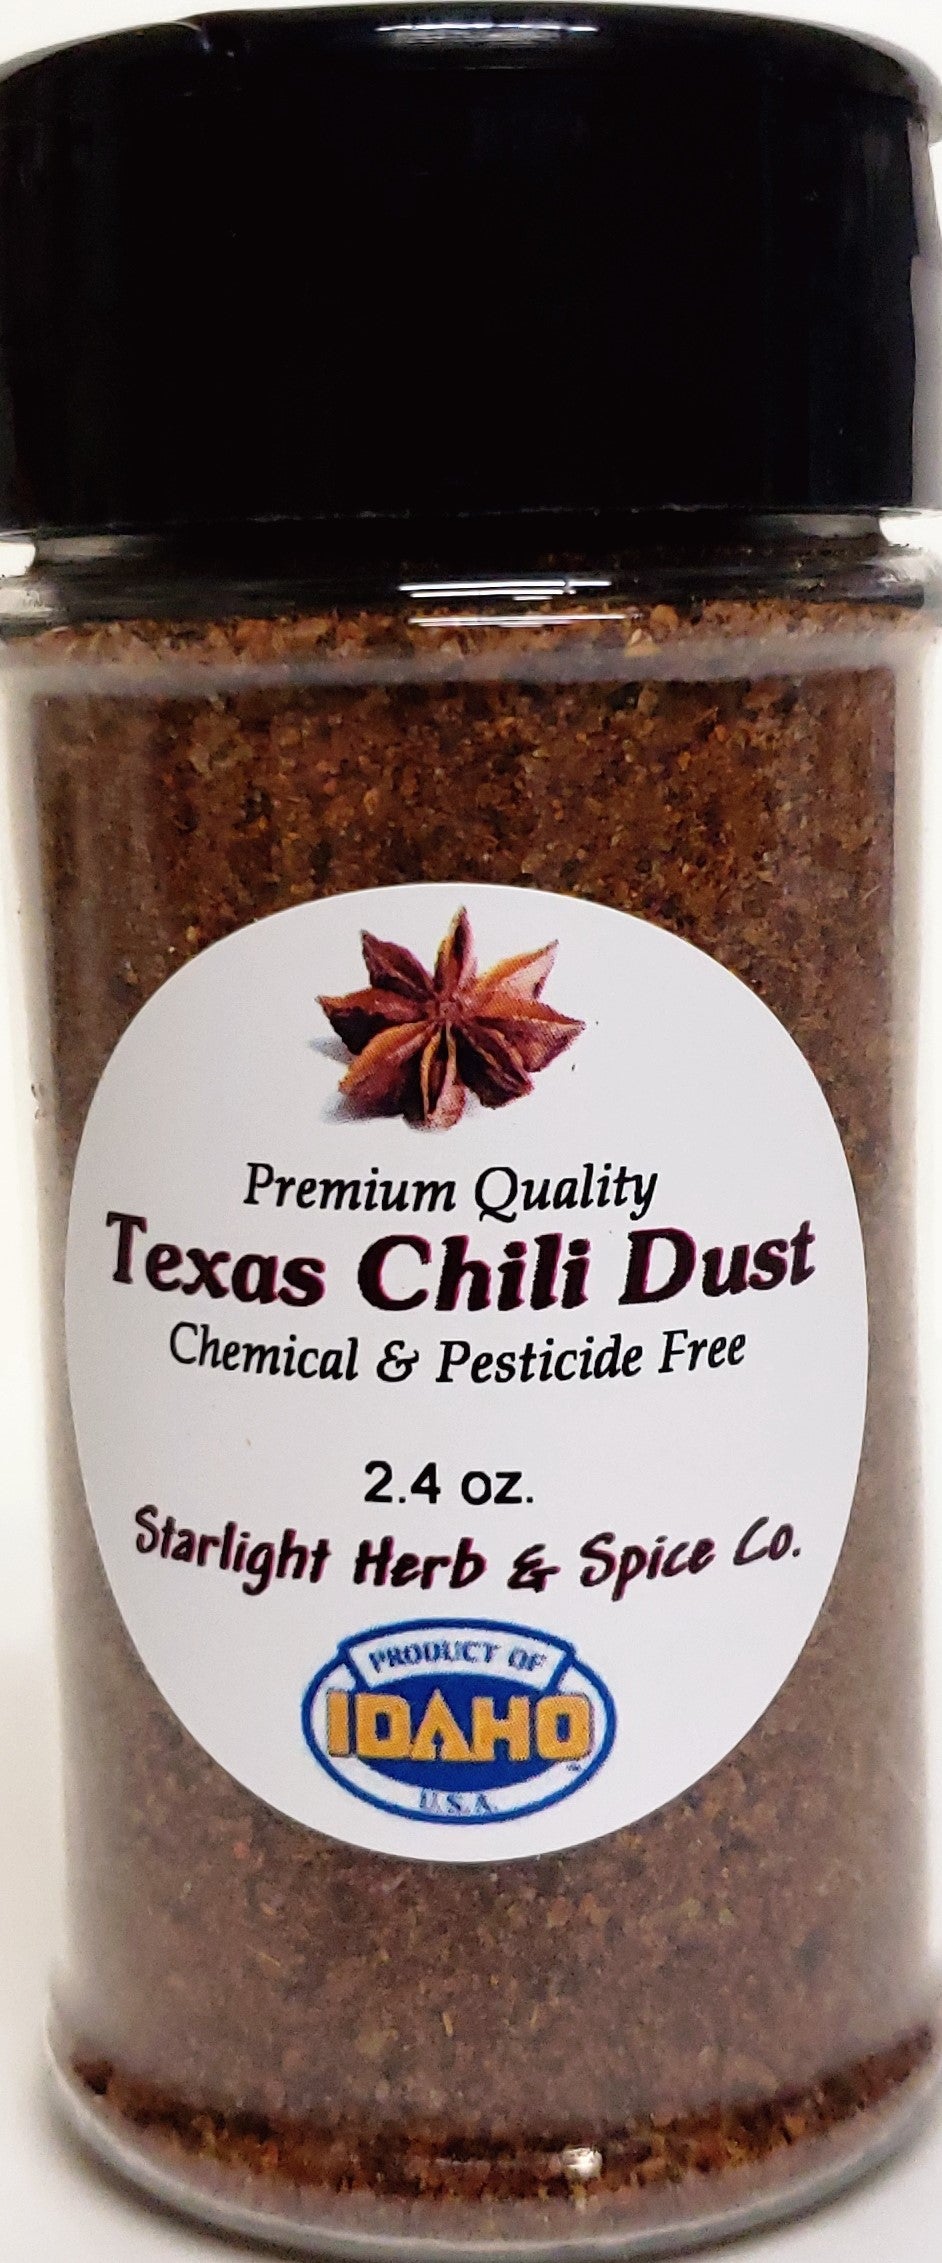 Texas Chili Dust